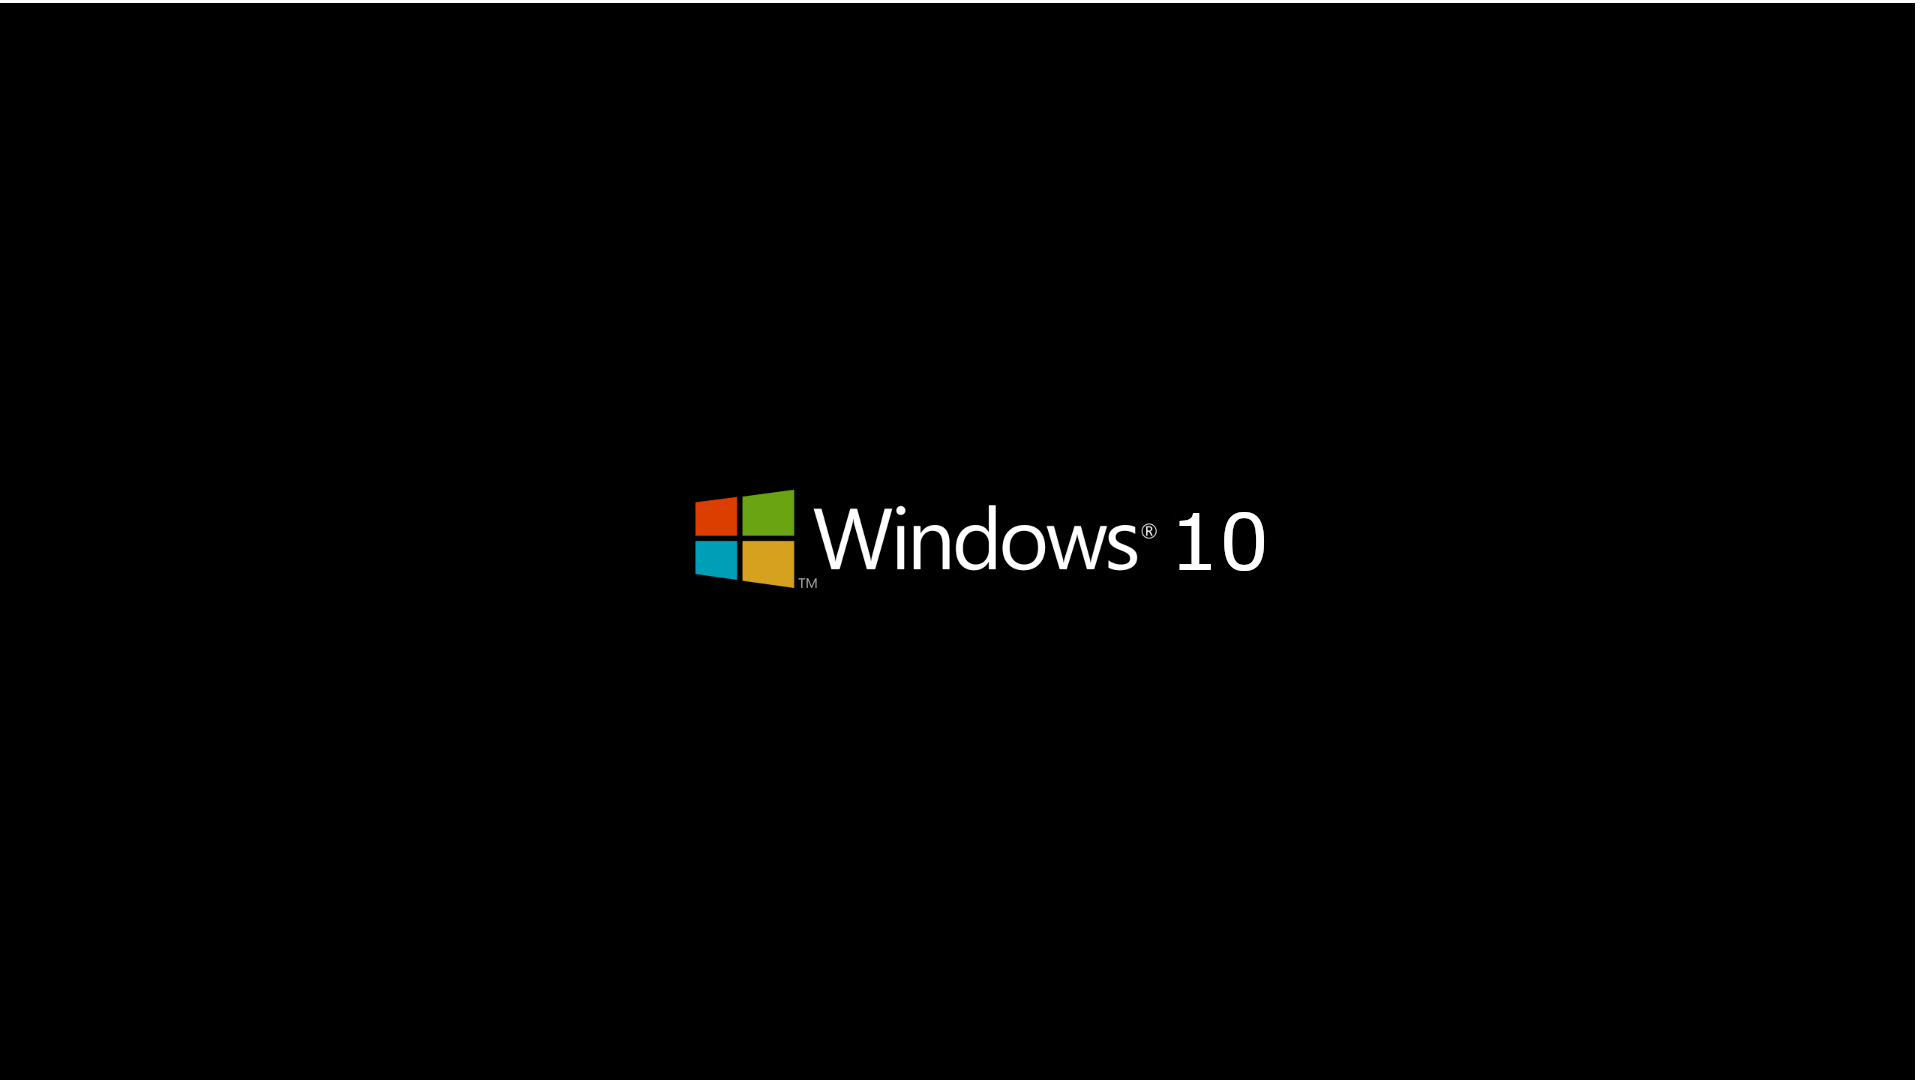 Windows 10 Microsoft Minimalism Simple Logo Operating System Black Background Brand 1920x1080